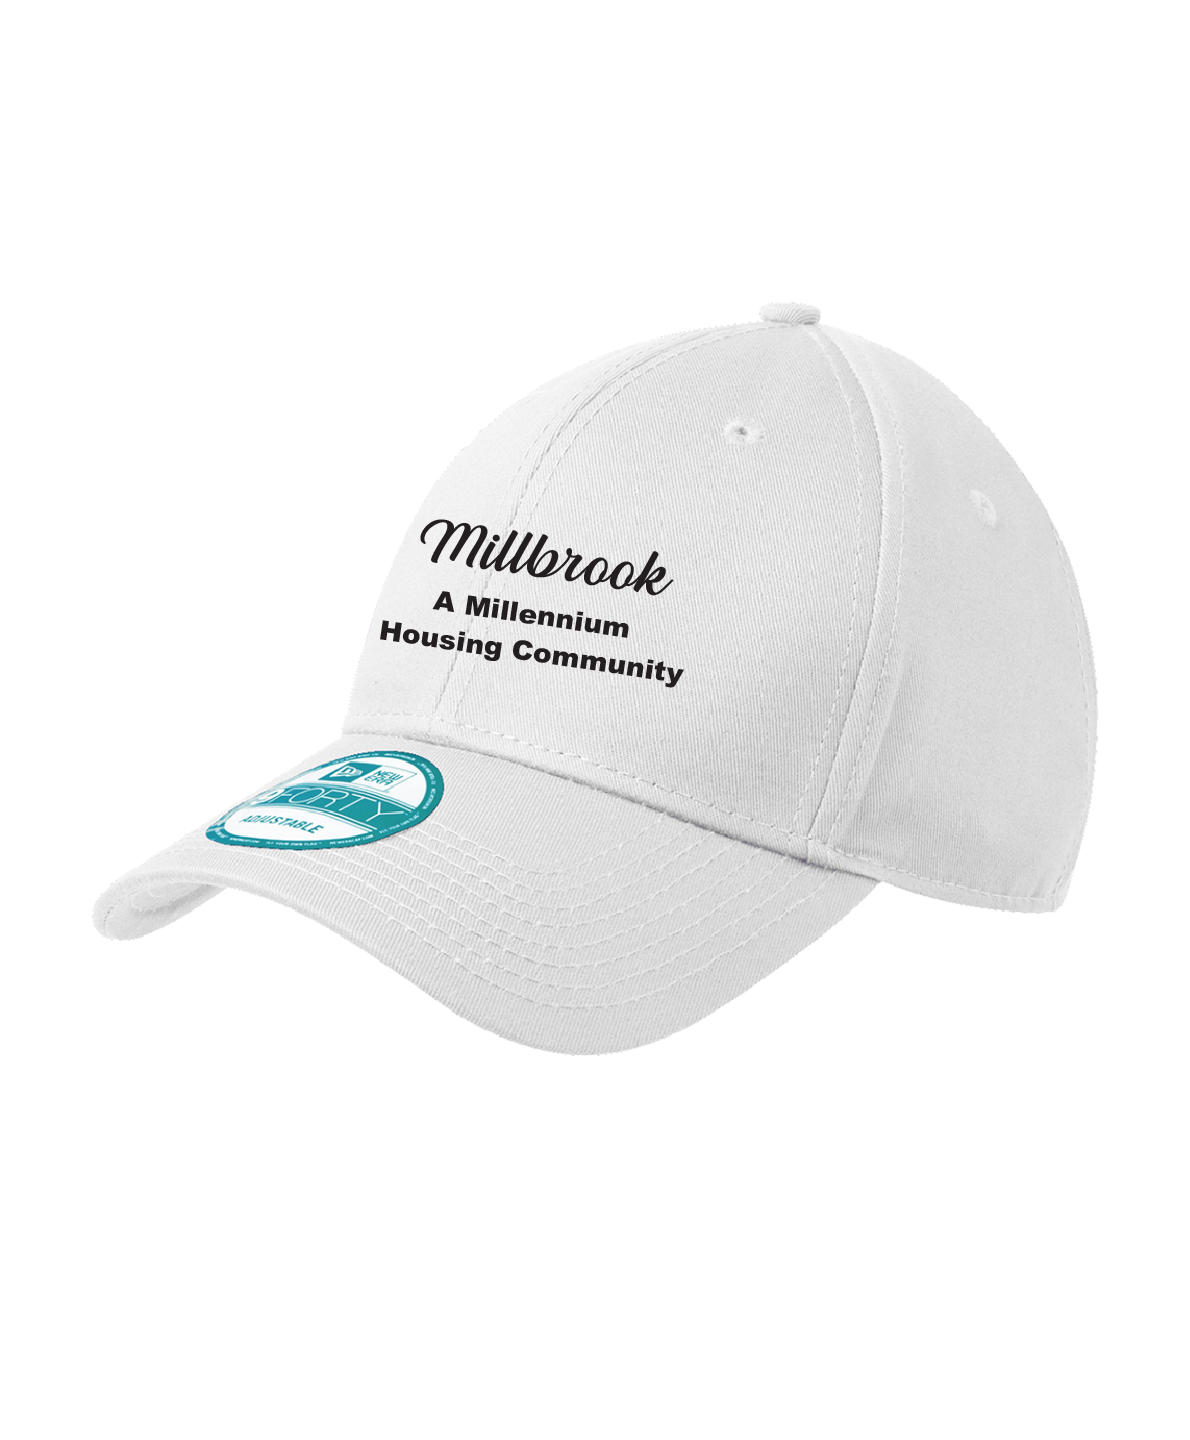 Millbrook - New Era® - Adjustable Structured Cap